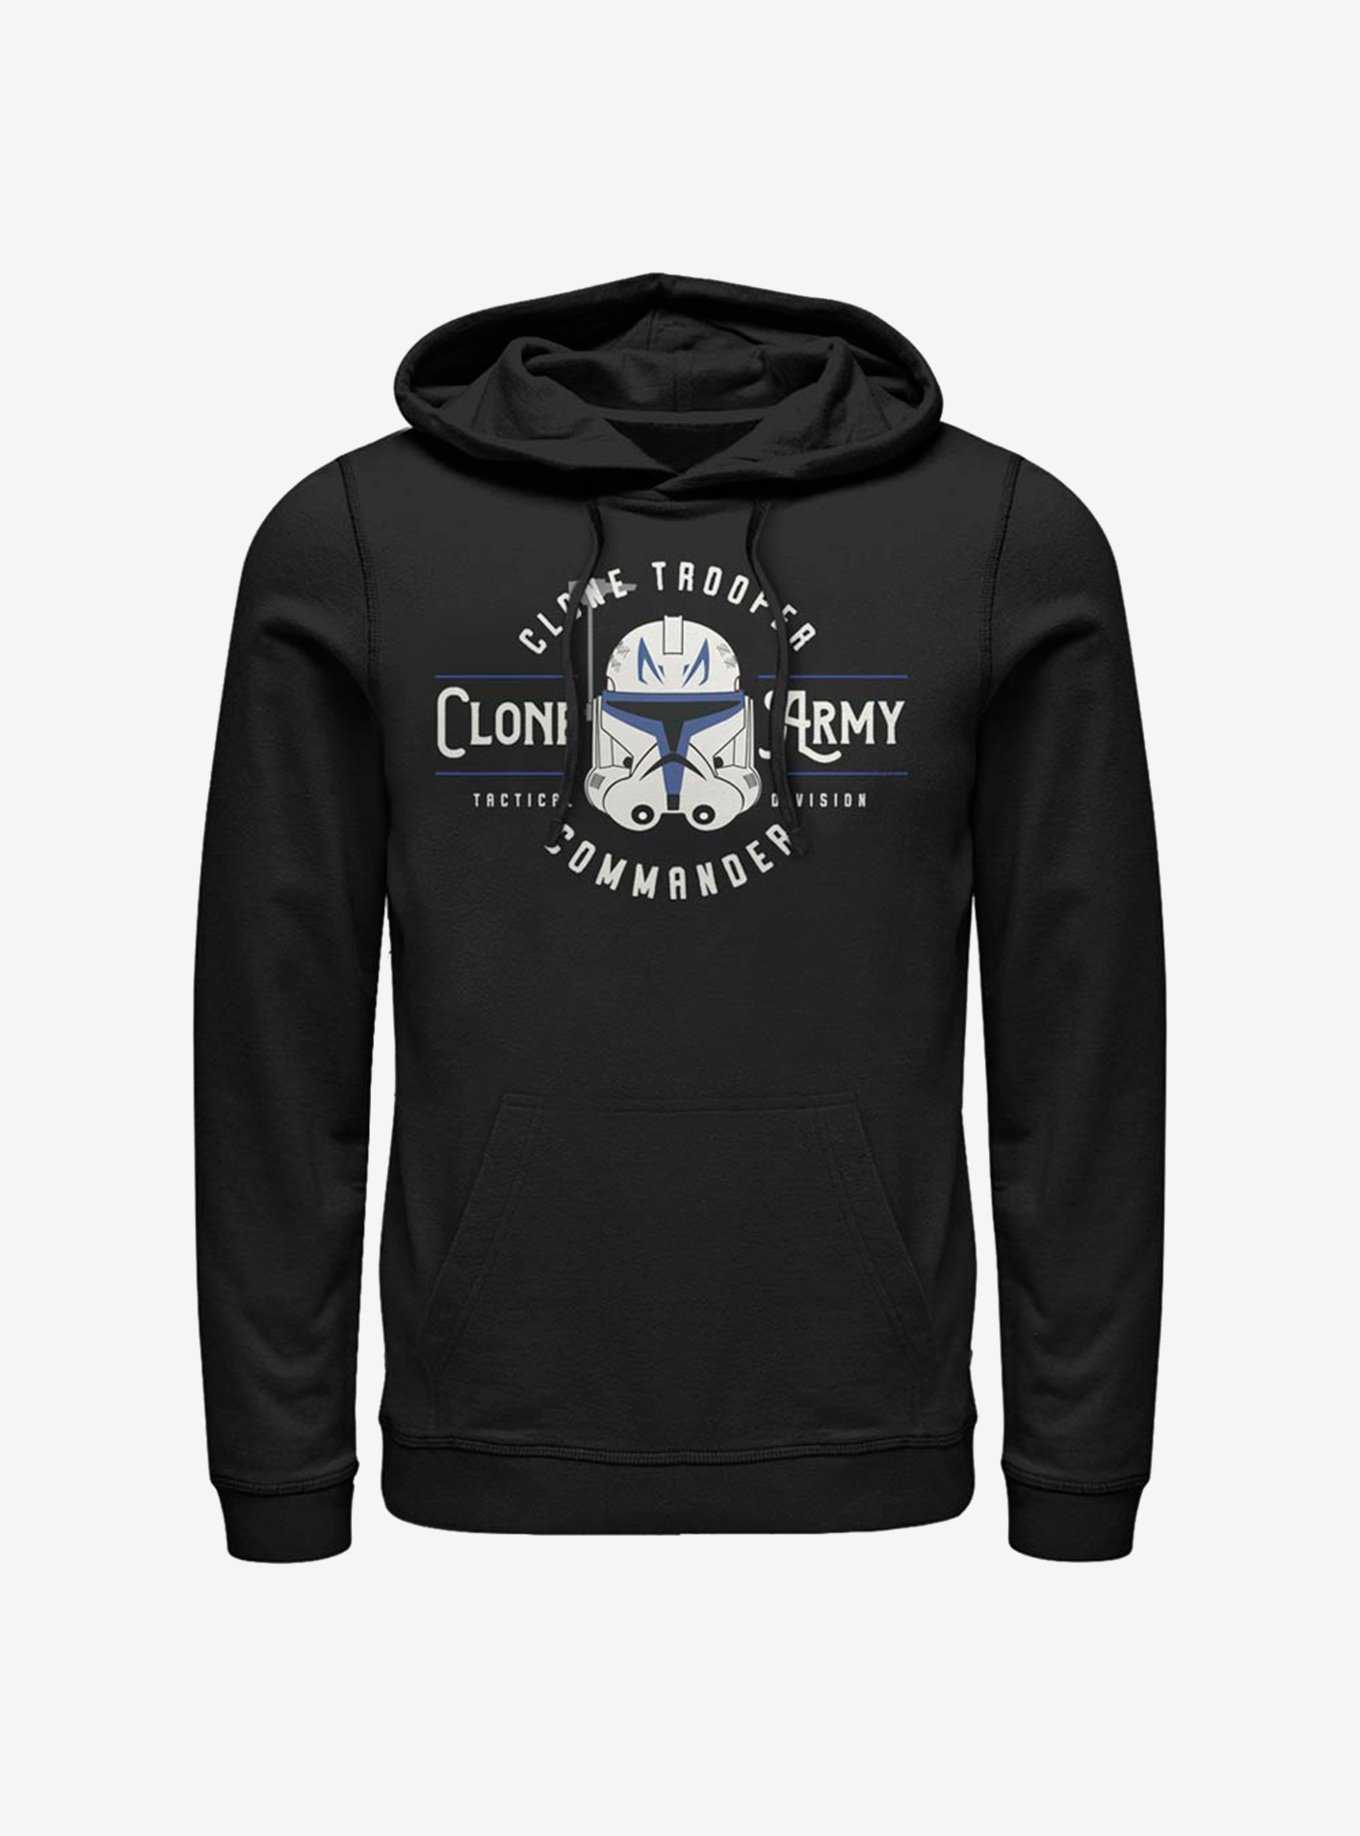 Star Wars: The Clone Wars Clone Army Emblem Hoodie, , hi-res